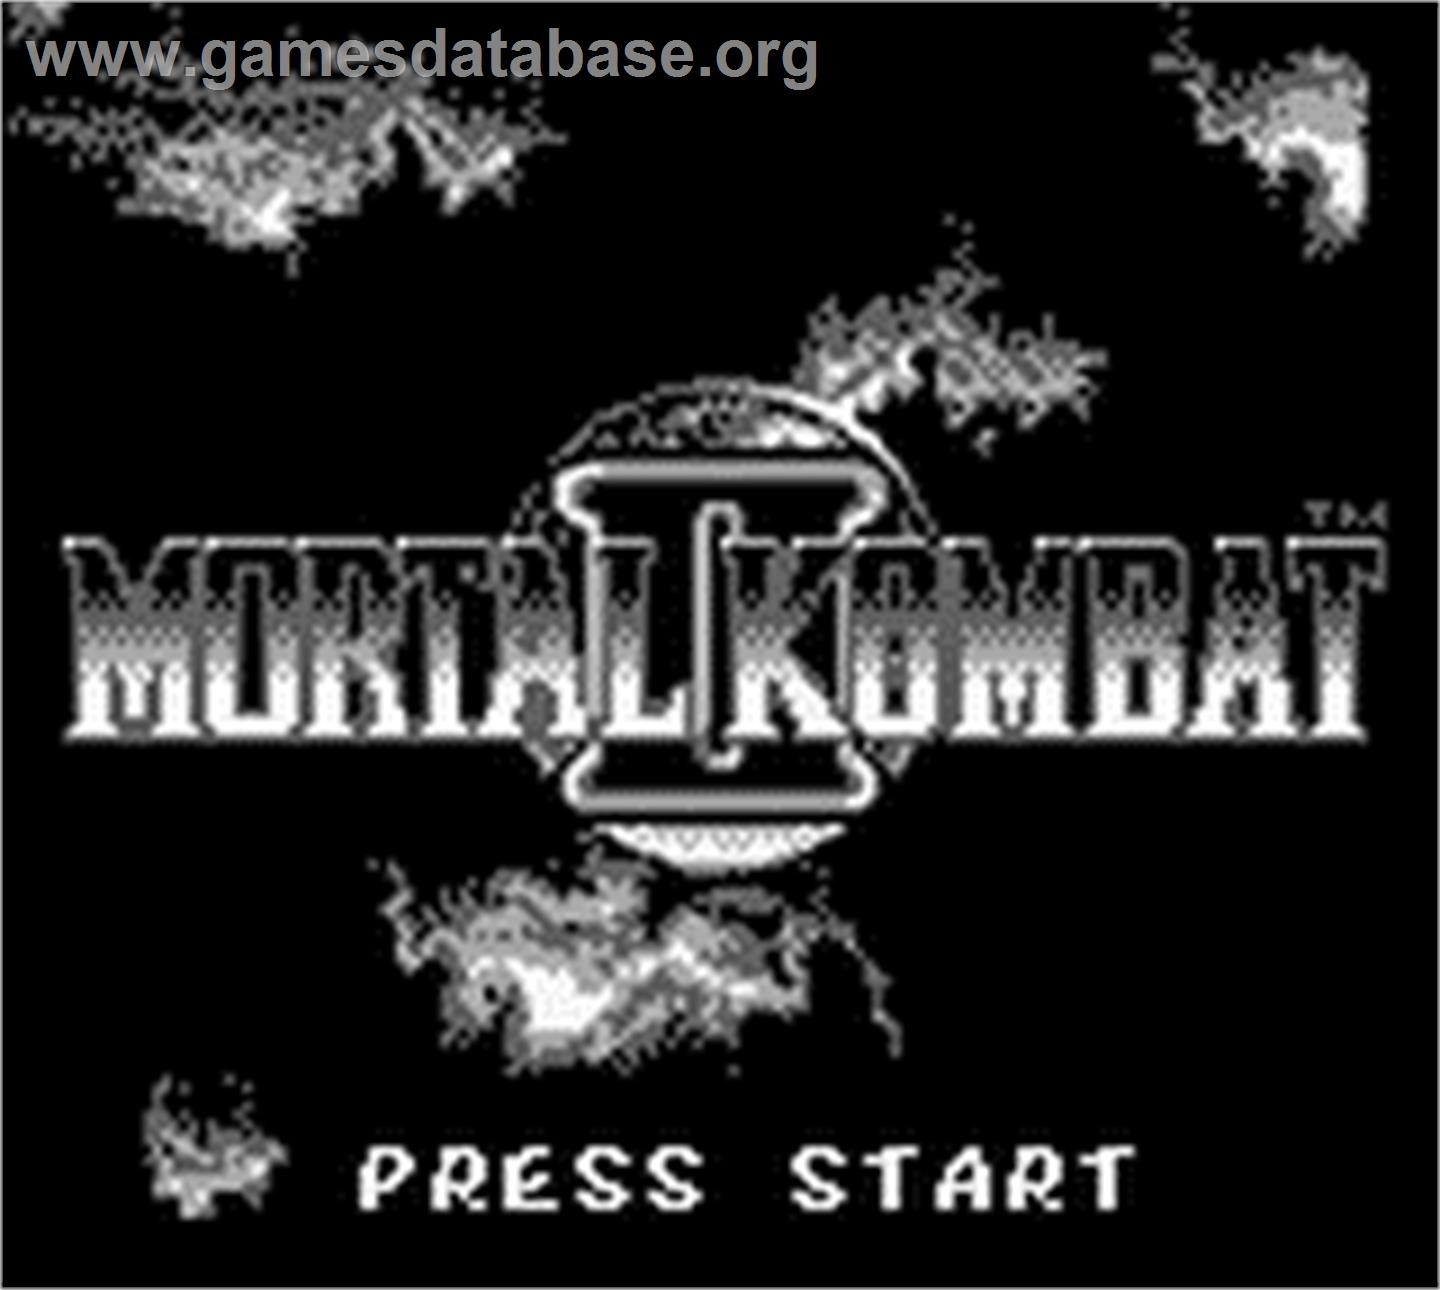 Mortal Kombat II - Nintendo Game Boy - Artwork - Title Screen